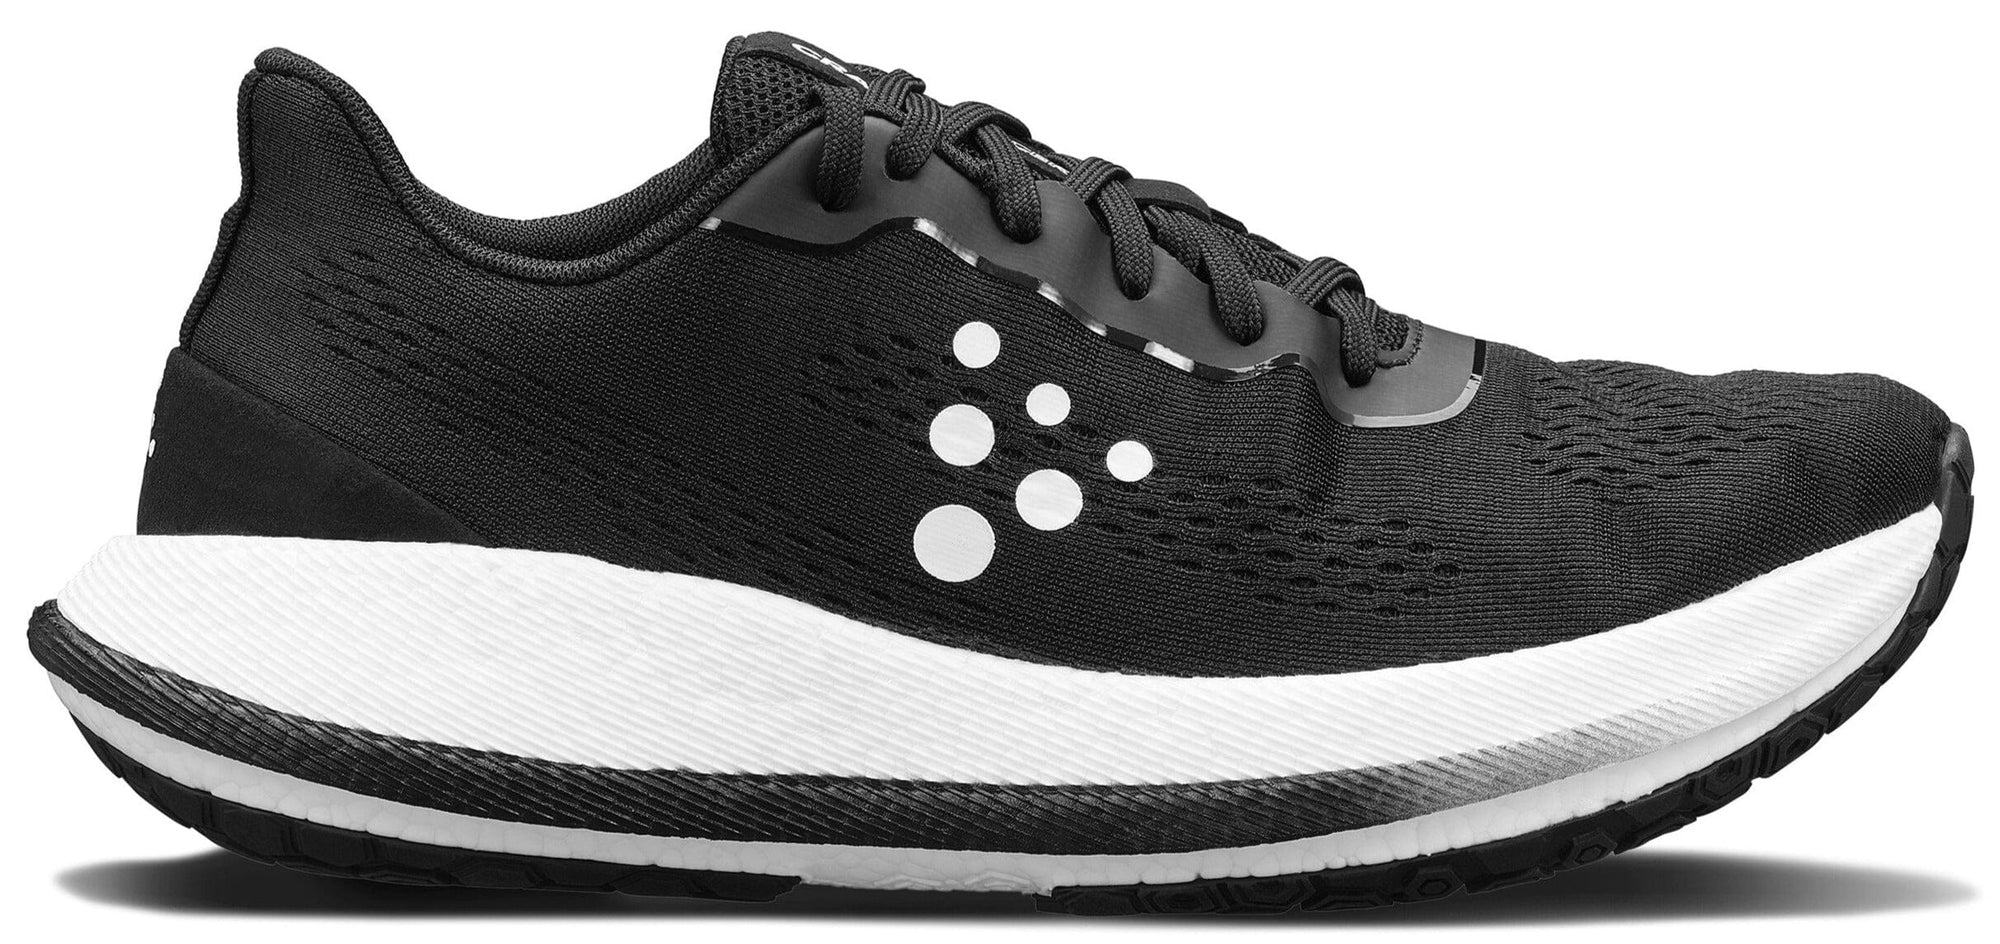 CRAFT Pacer Men's Road Running Shoes Black UK 7.5 EU 41.5 